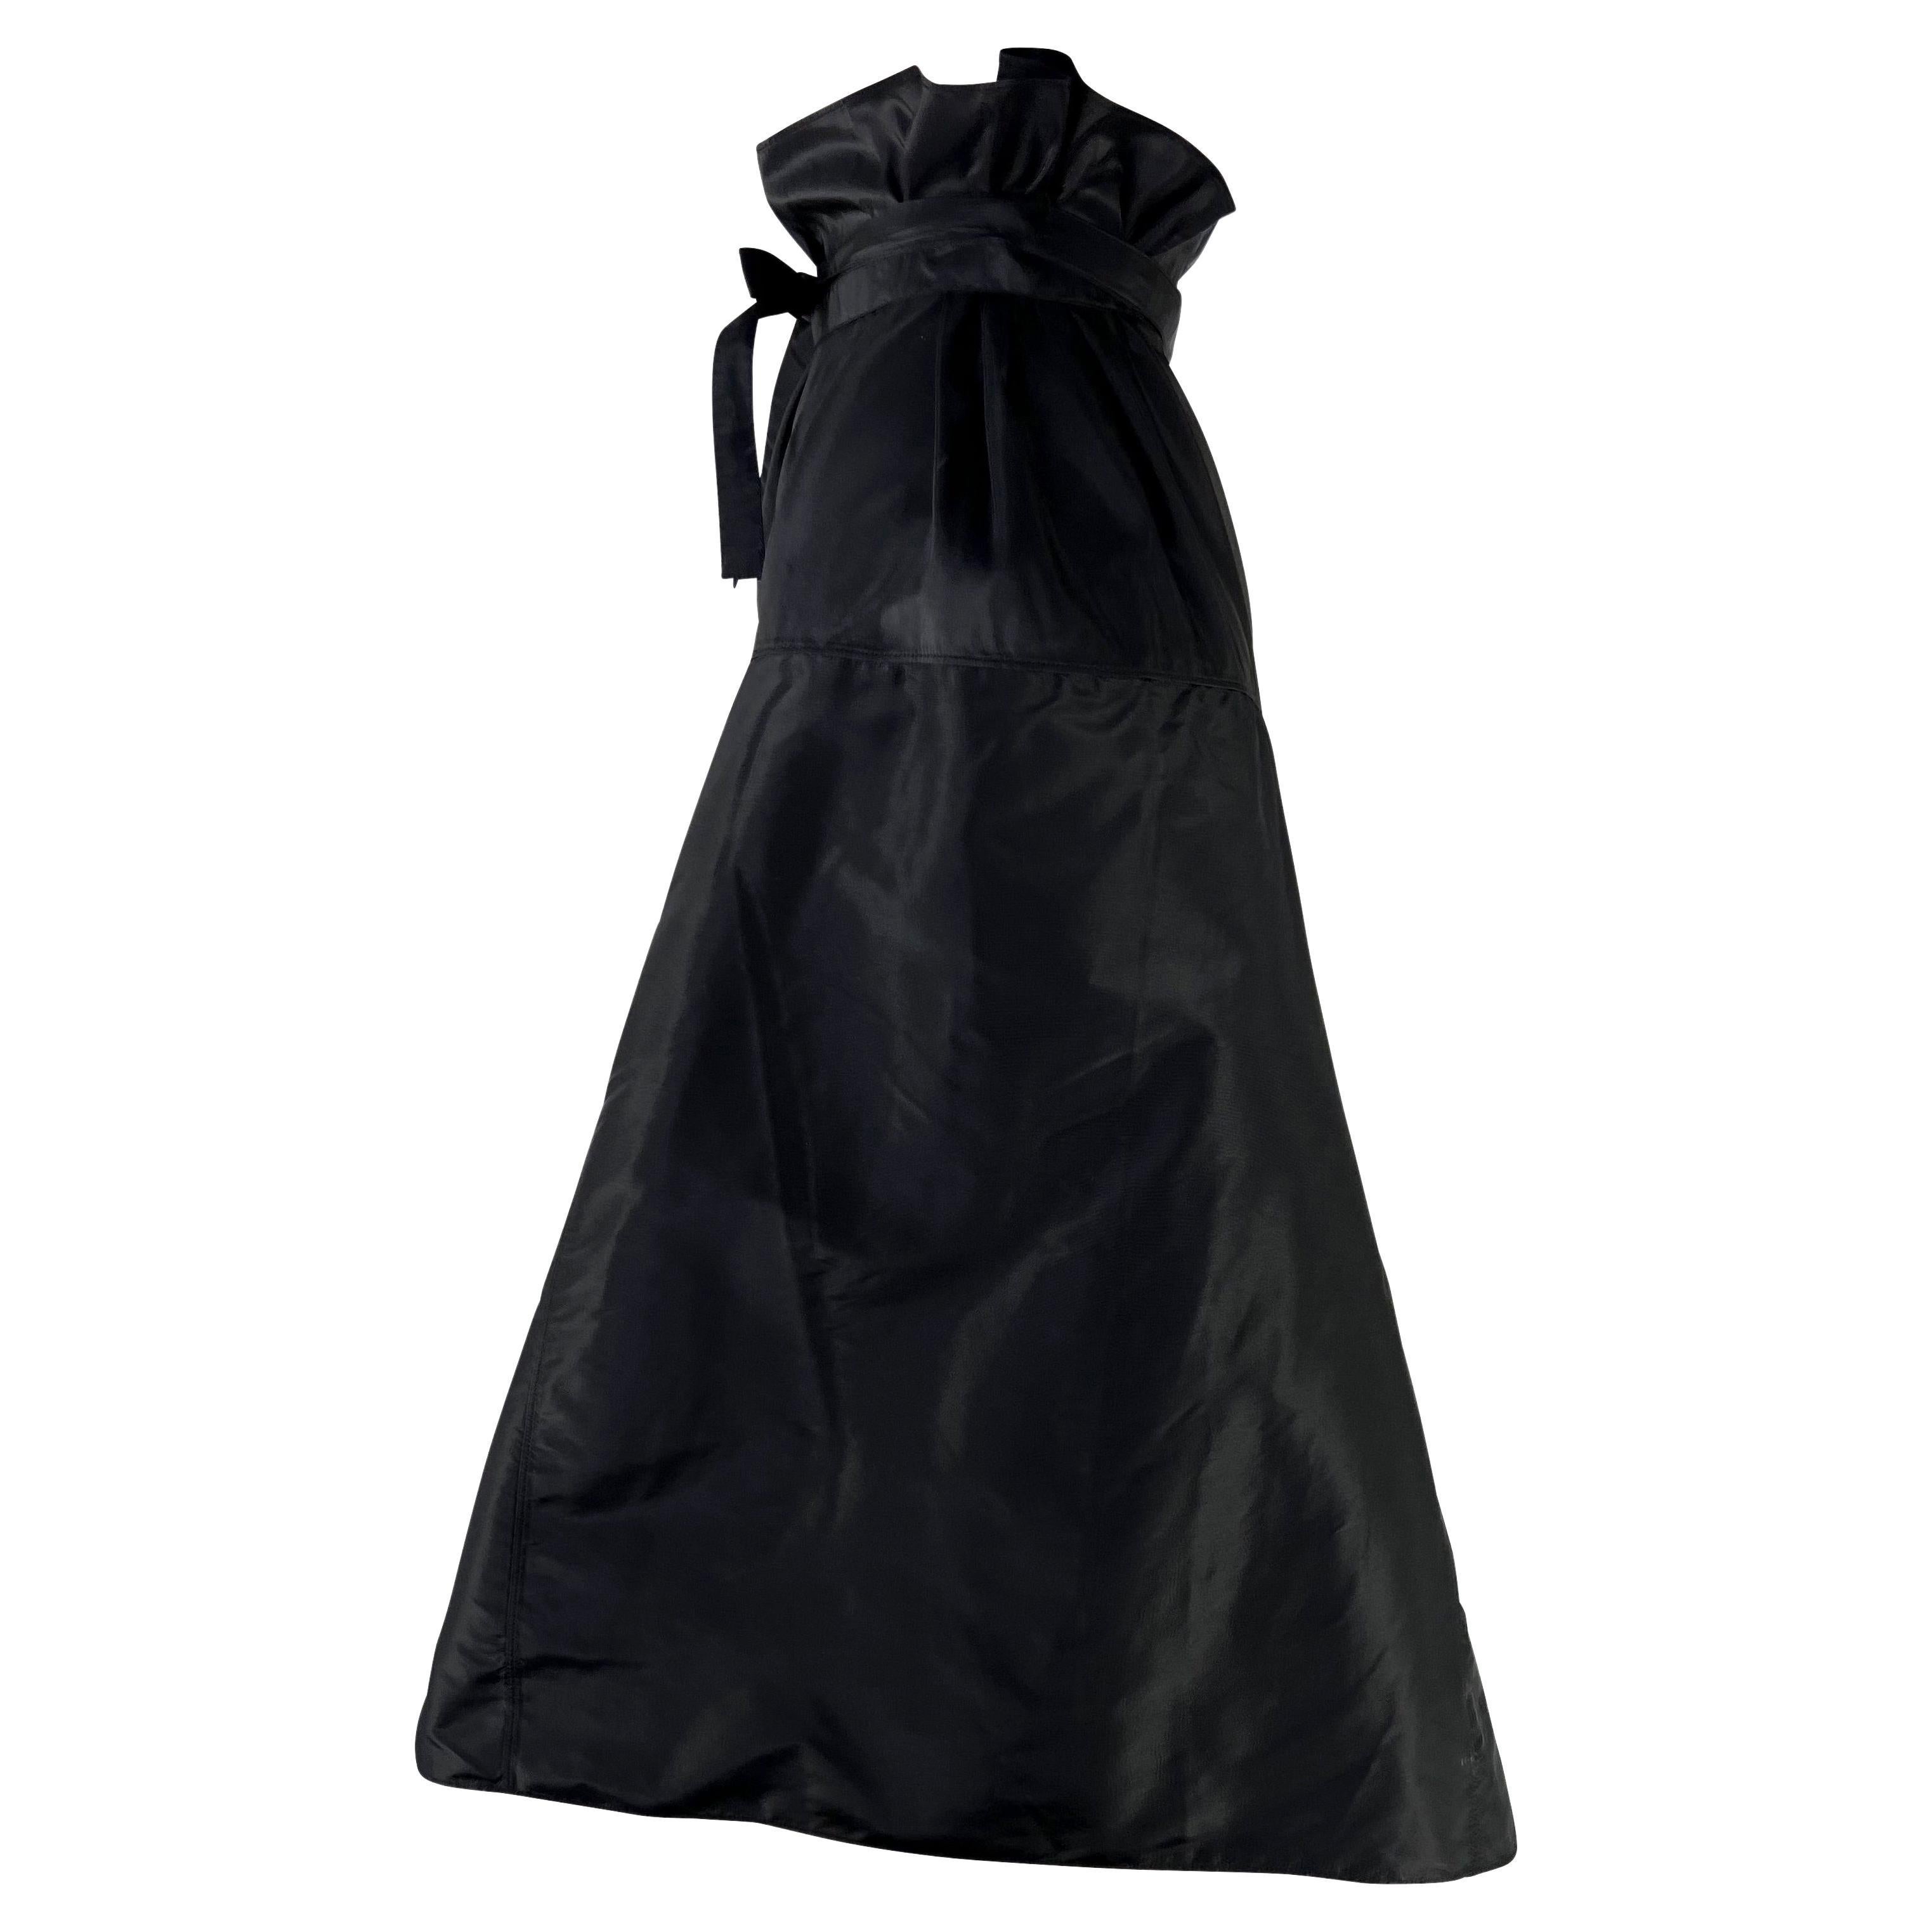 S/S 2002 Gucci by Tom Ford Runway Black Silk Taffeta Belted Wrap Oversized Skirt (Jupe enveloppante ceinturée en taffetas de soie) Pour femmes en vente